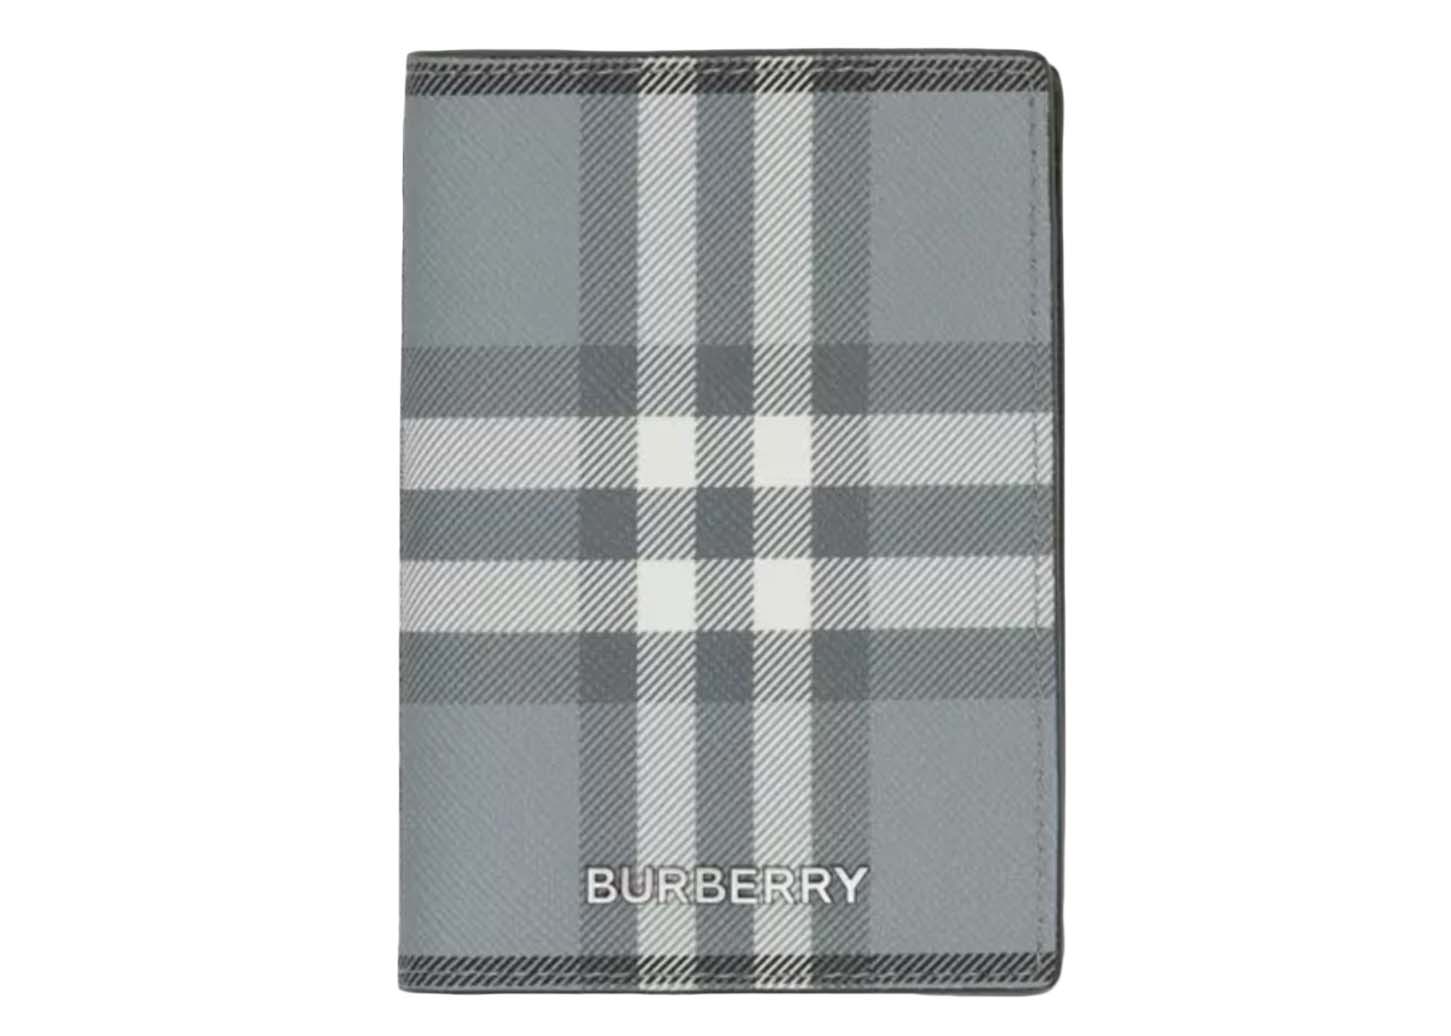 Burberry Vintage Check Folding Card Case (4 Card Slot) Storm Grey Check